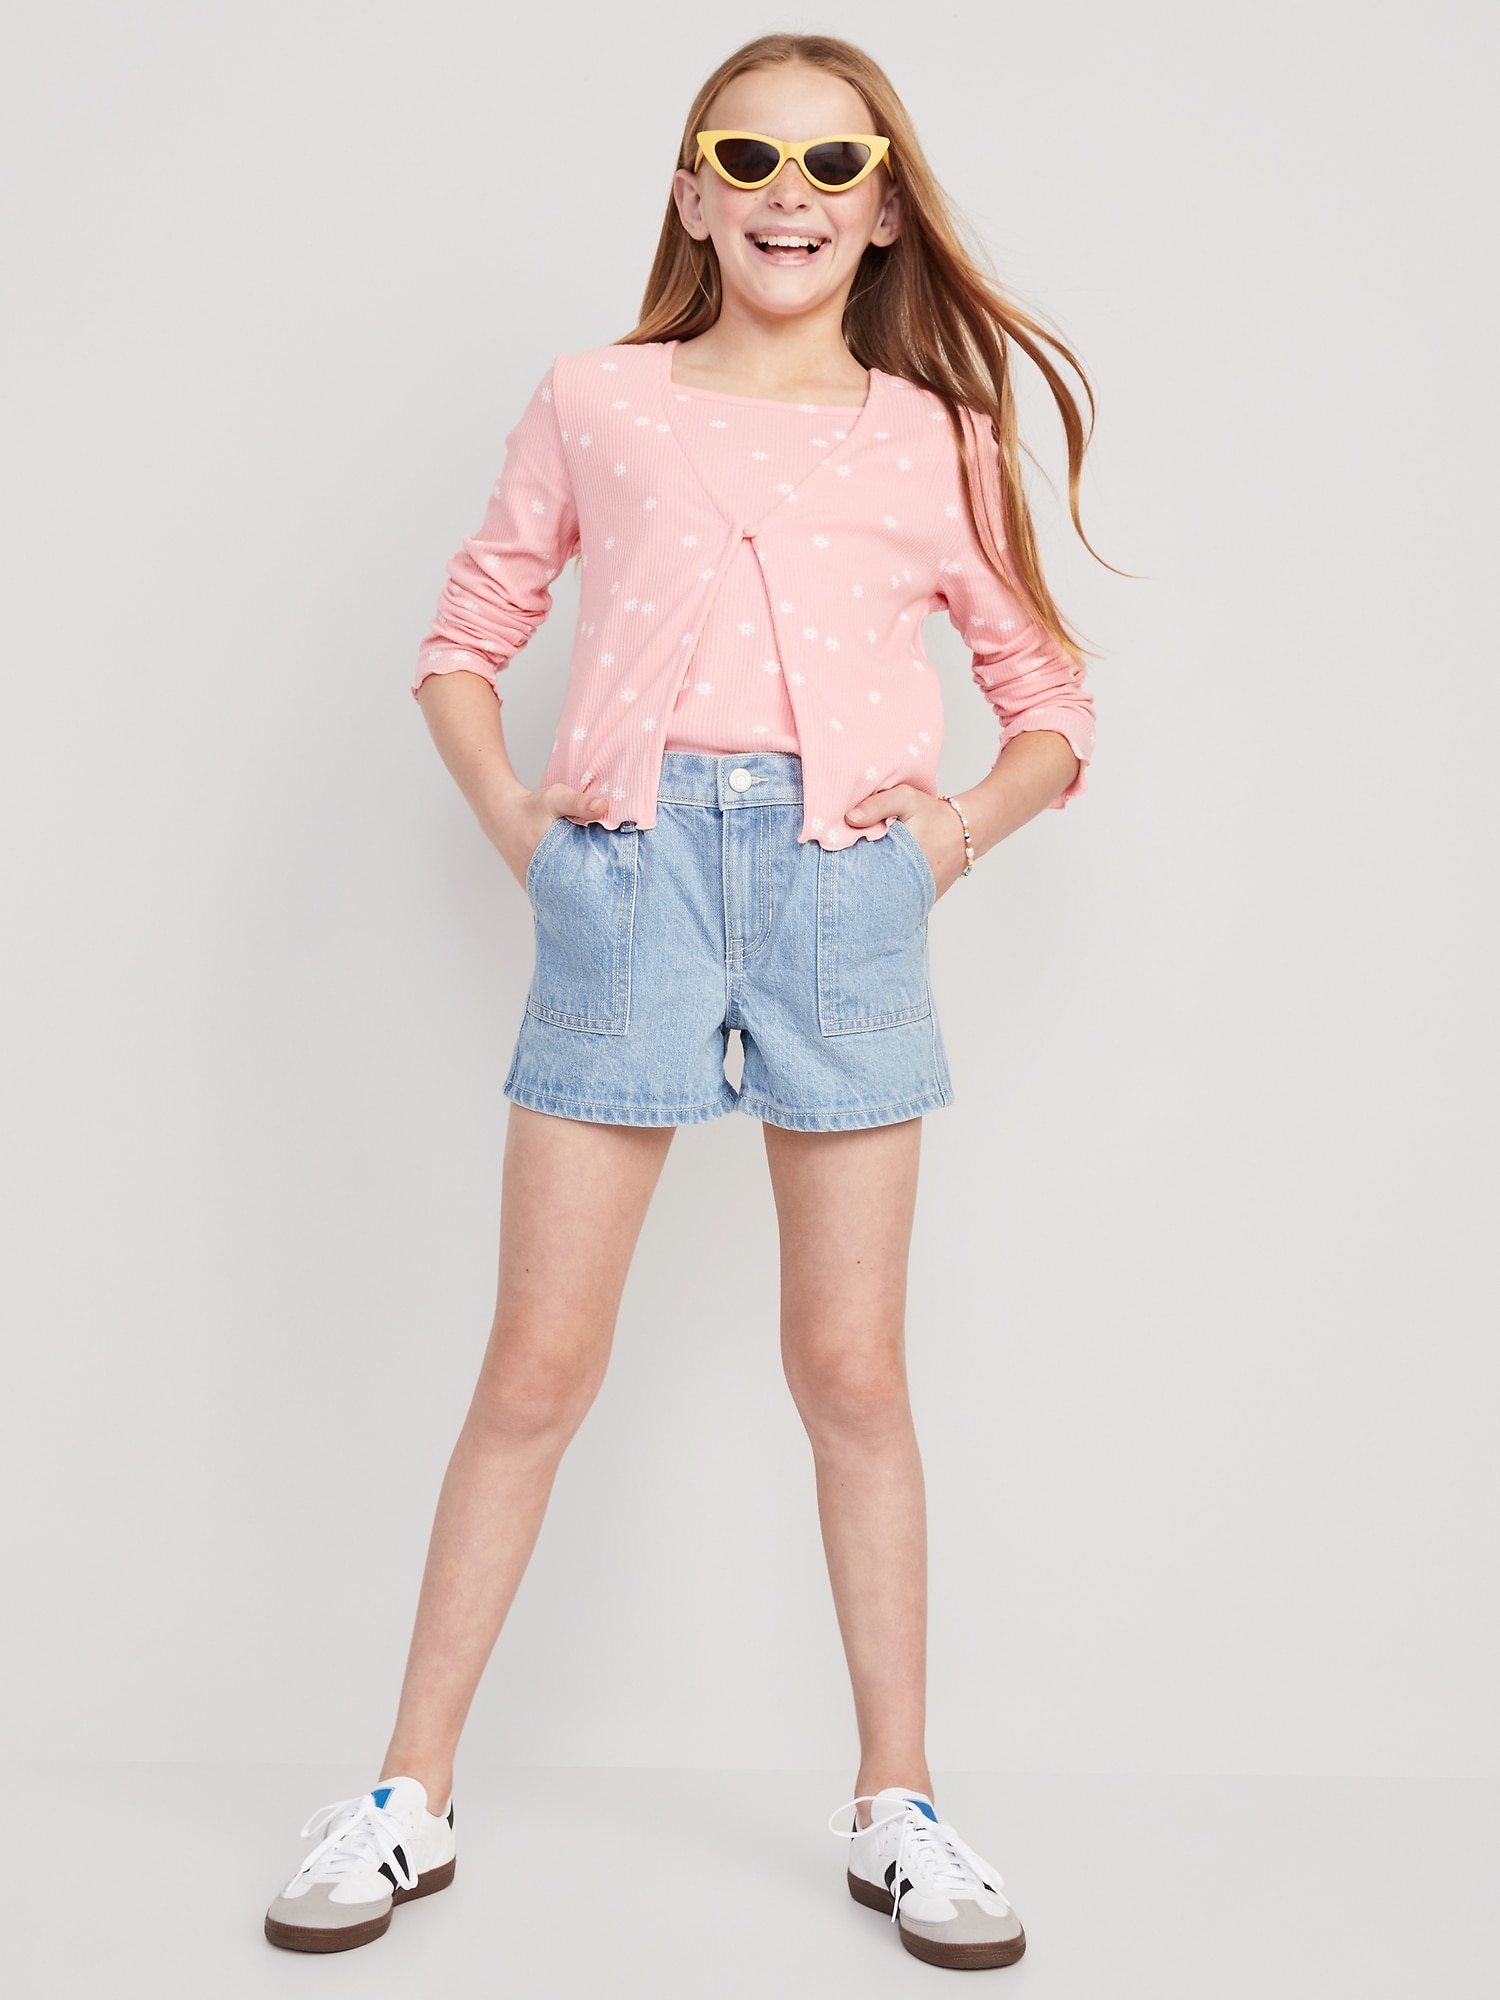 Modal elastic waist shorts BM - Teenage girl